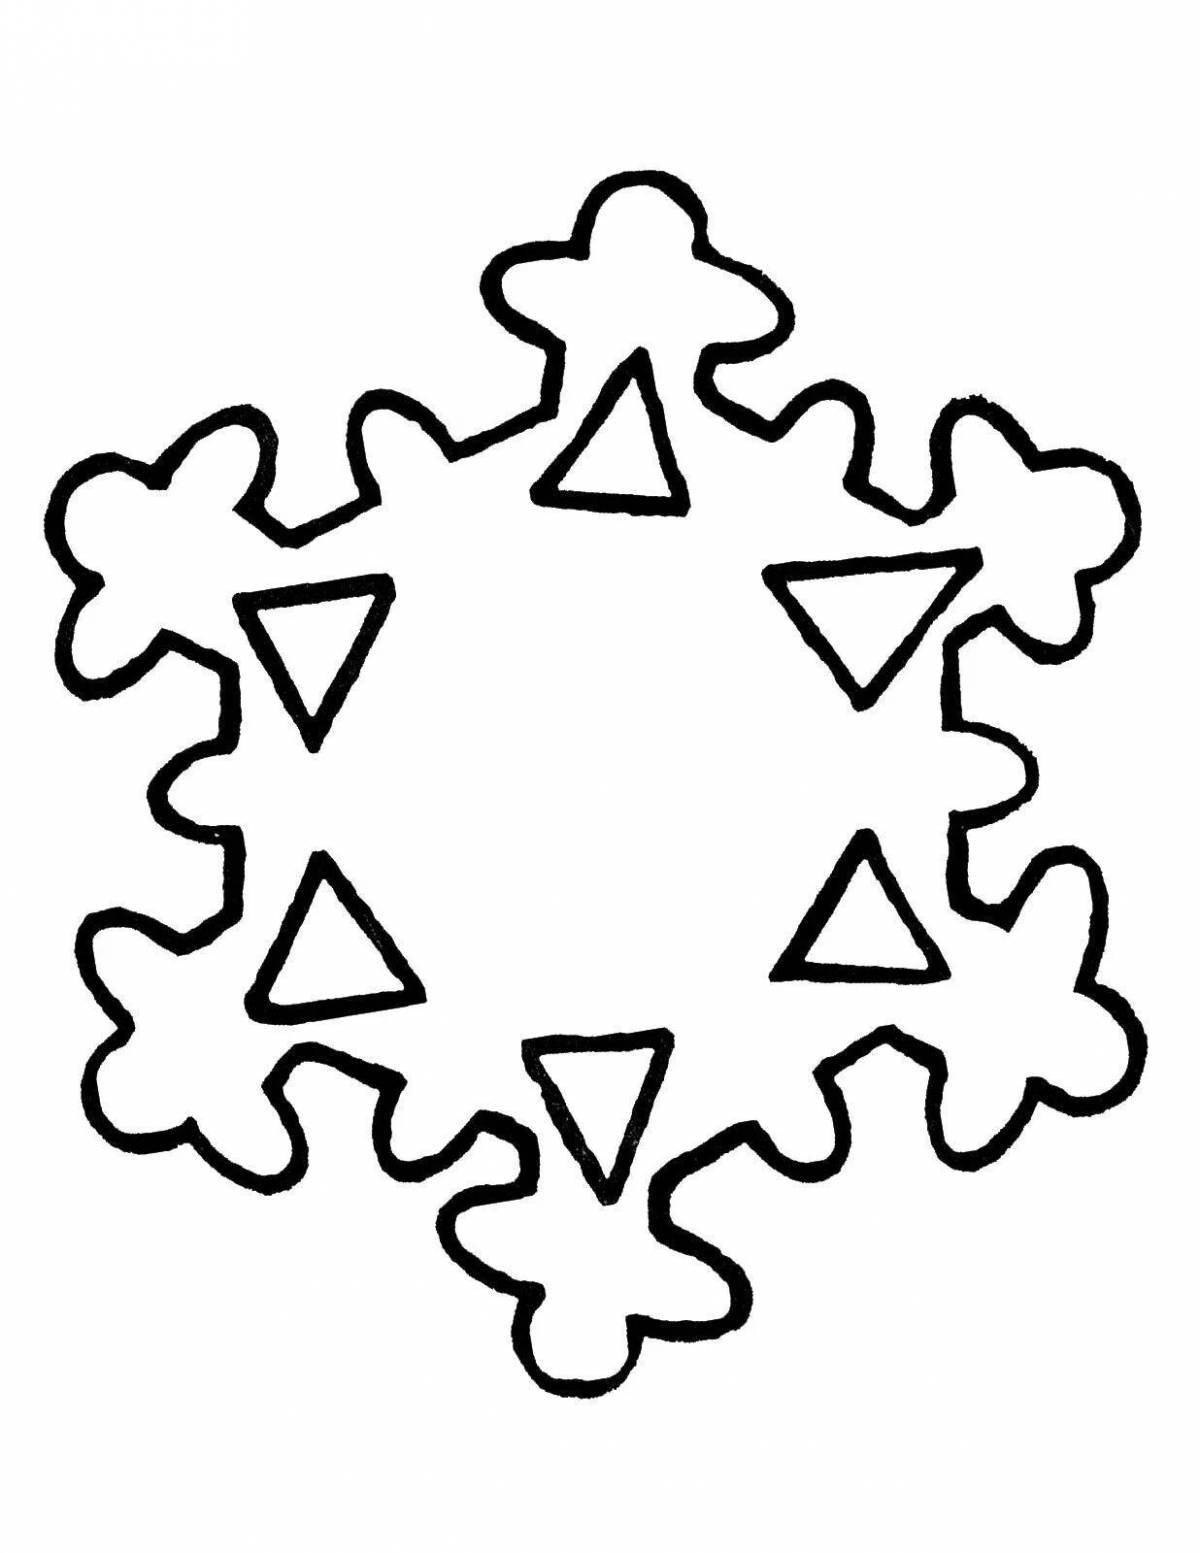 Adorable snowflake coloring page